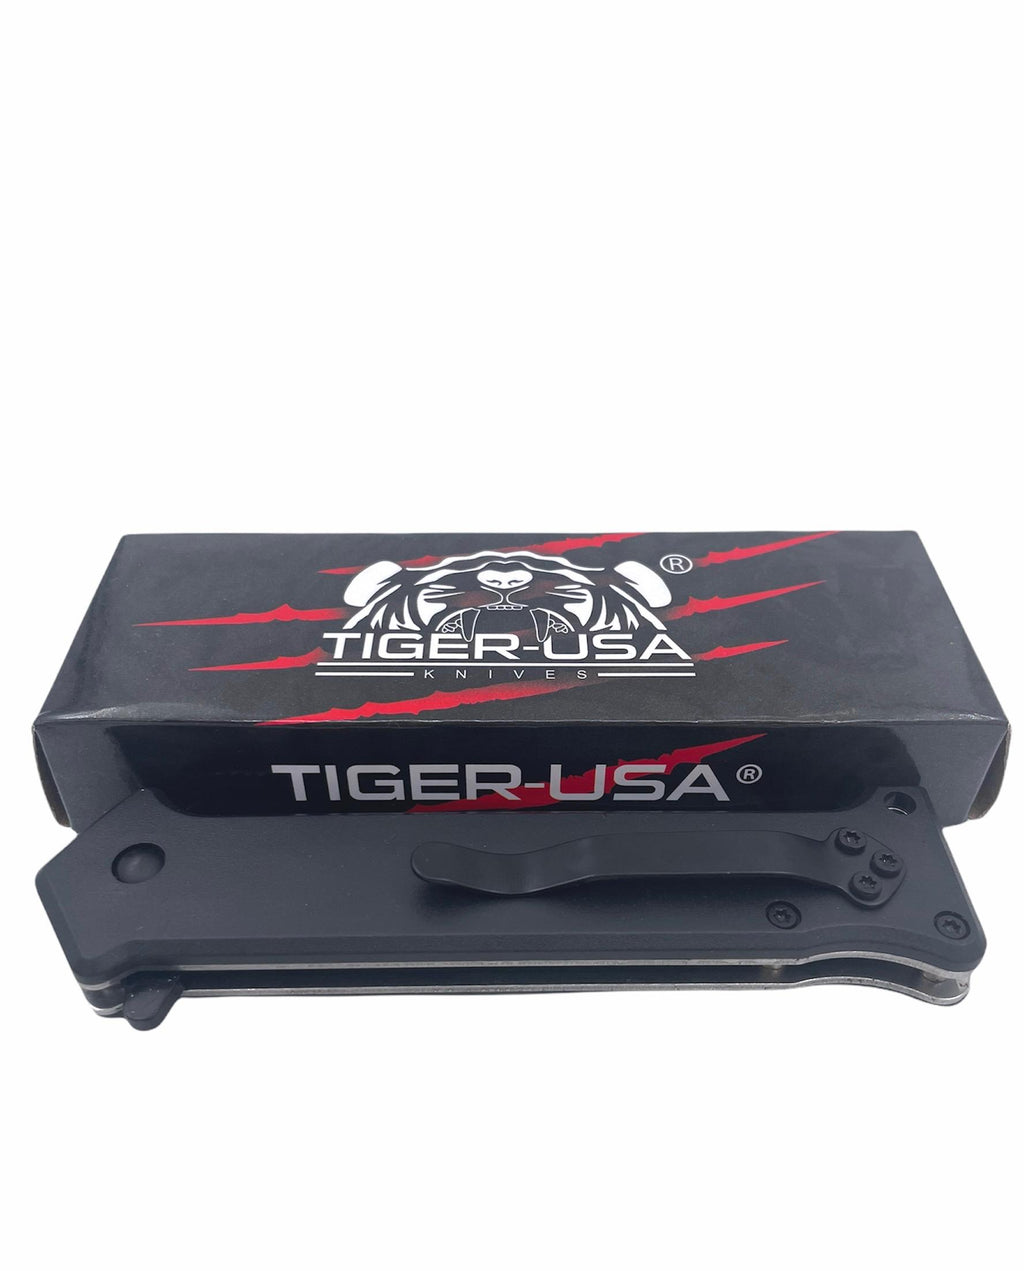 Tiger-USA Spring Assisted Knife FIREFIGHTER